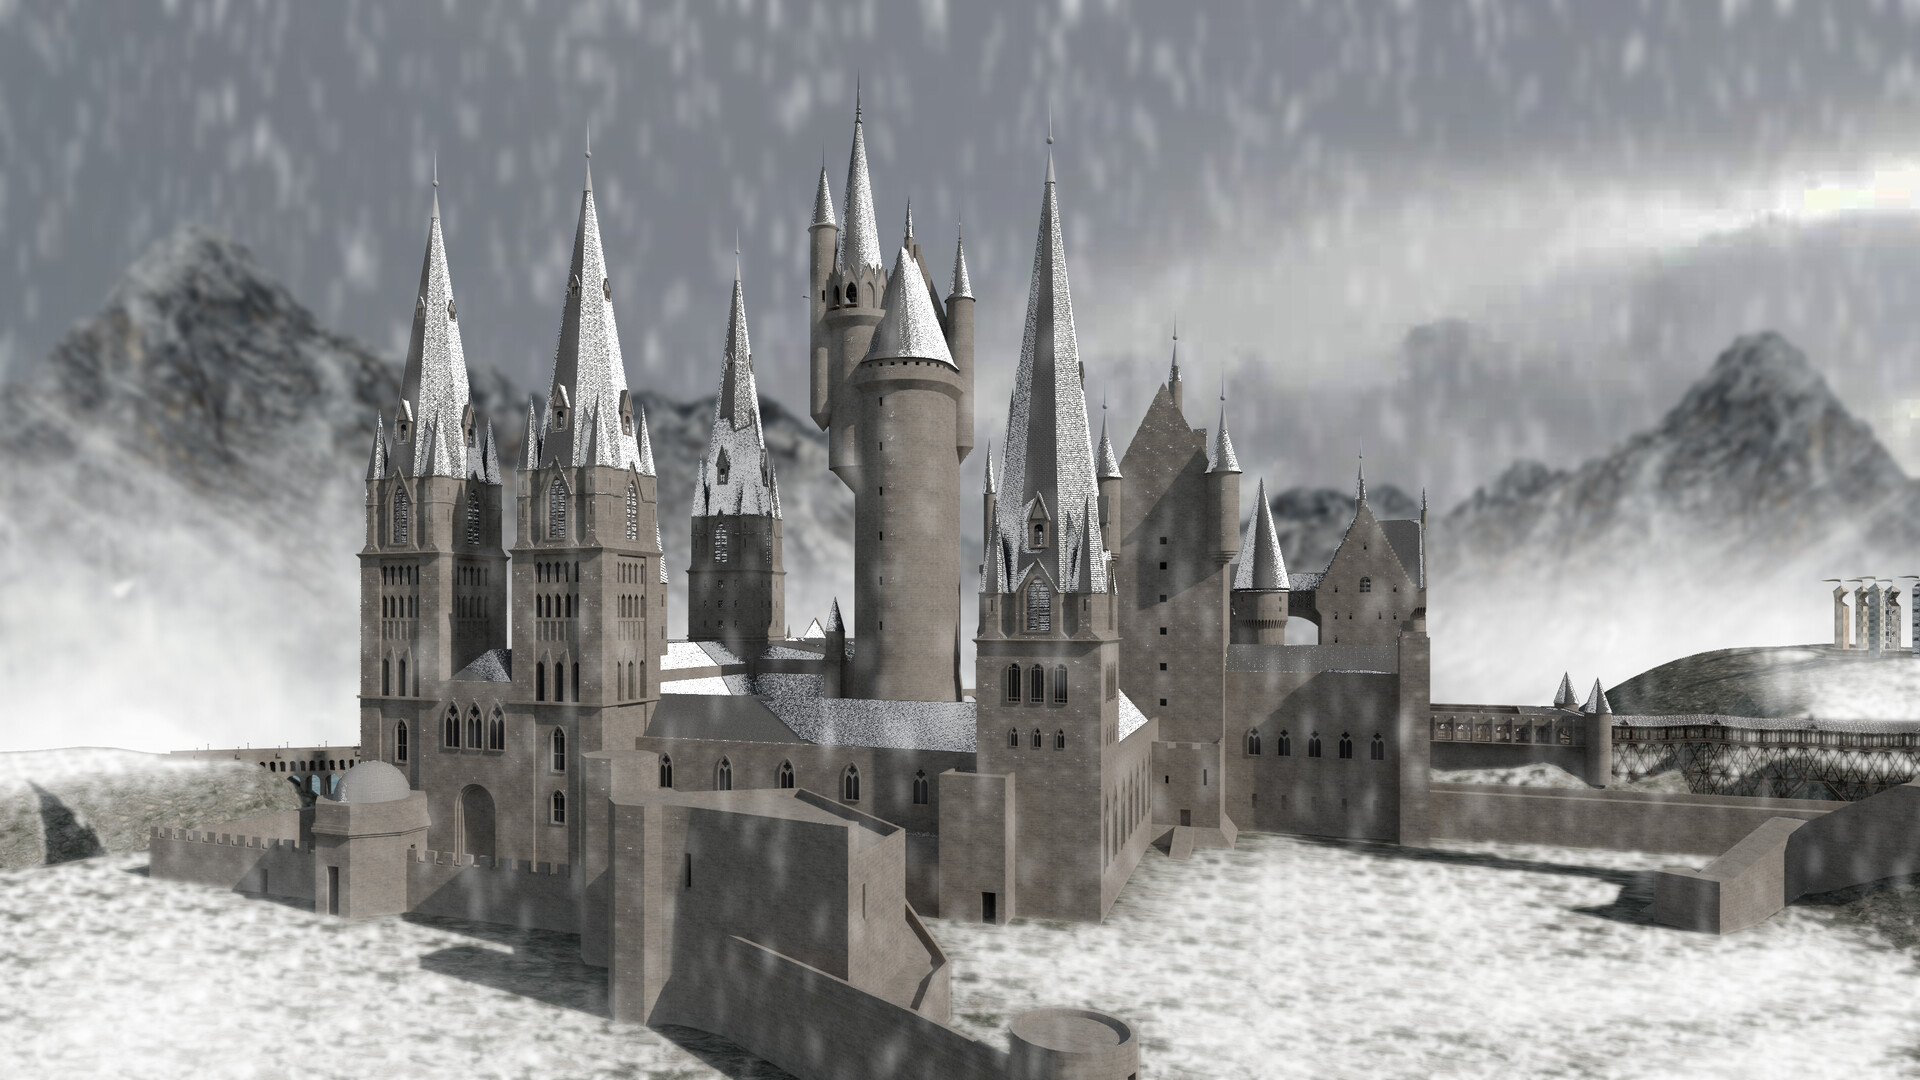 ArtStation - Hogwarts Castle - Snow day